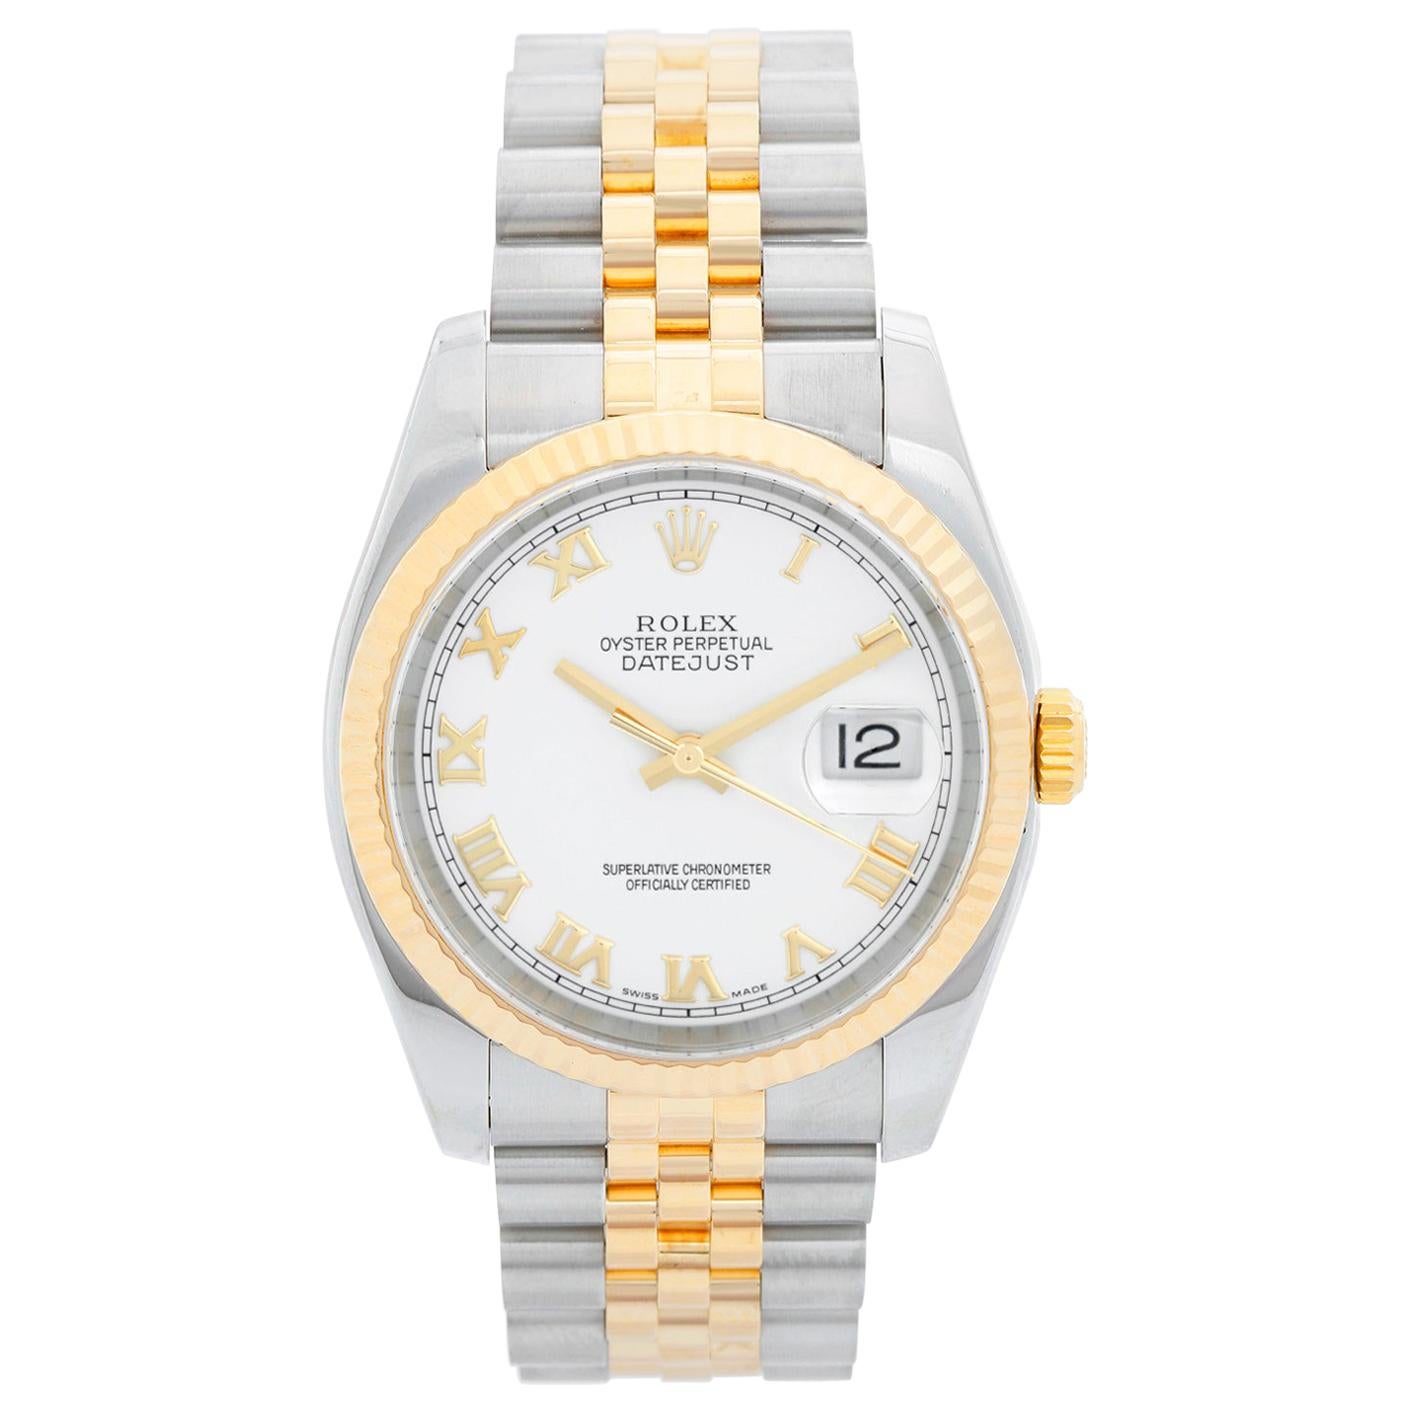 Rolex Datejust Men's 2-Tone Watch 116233